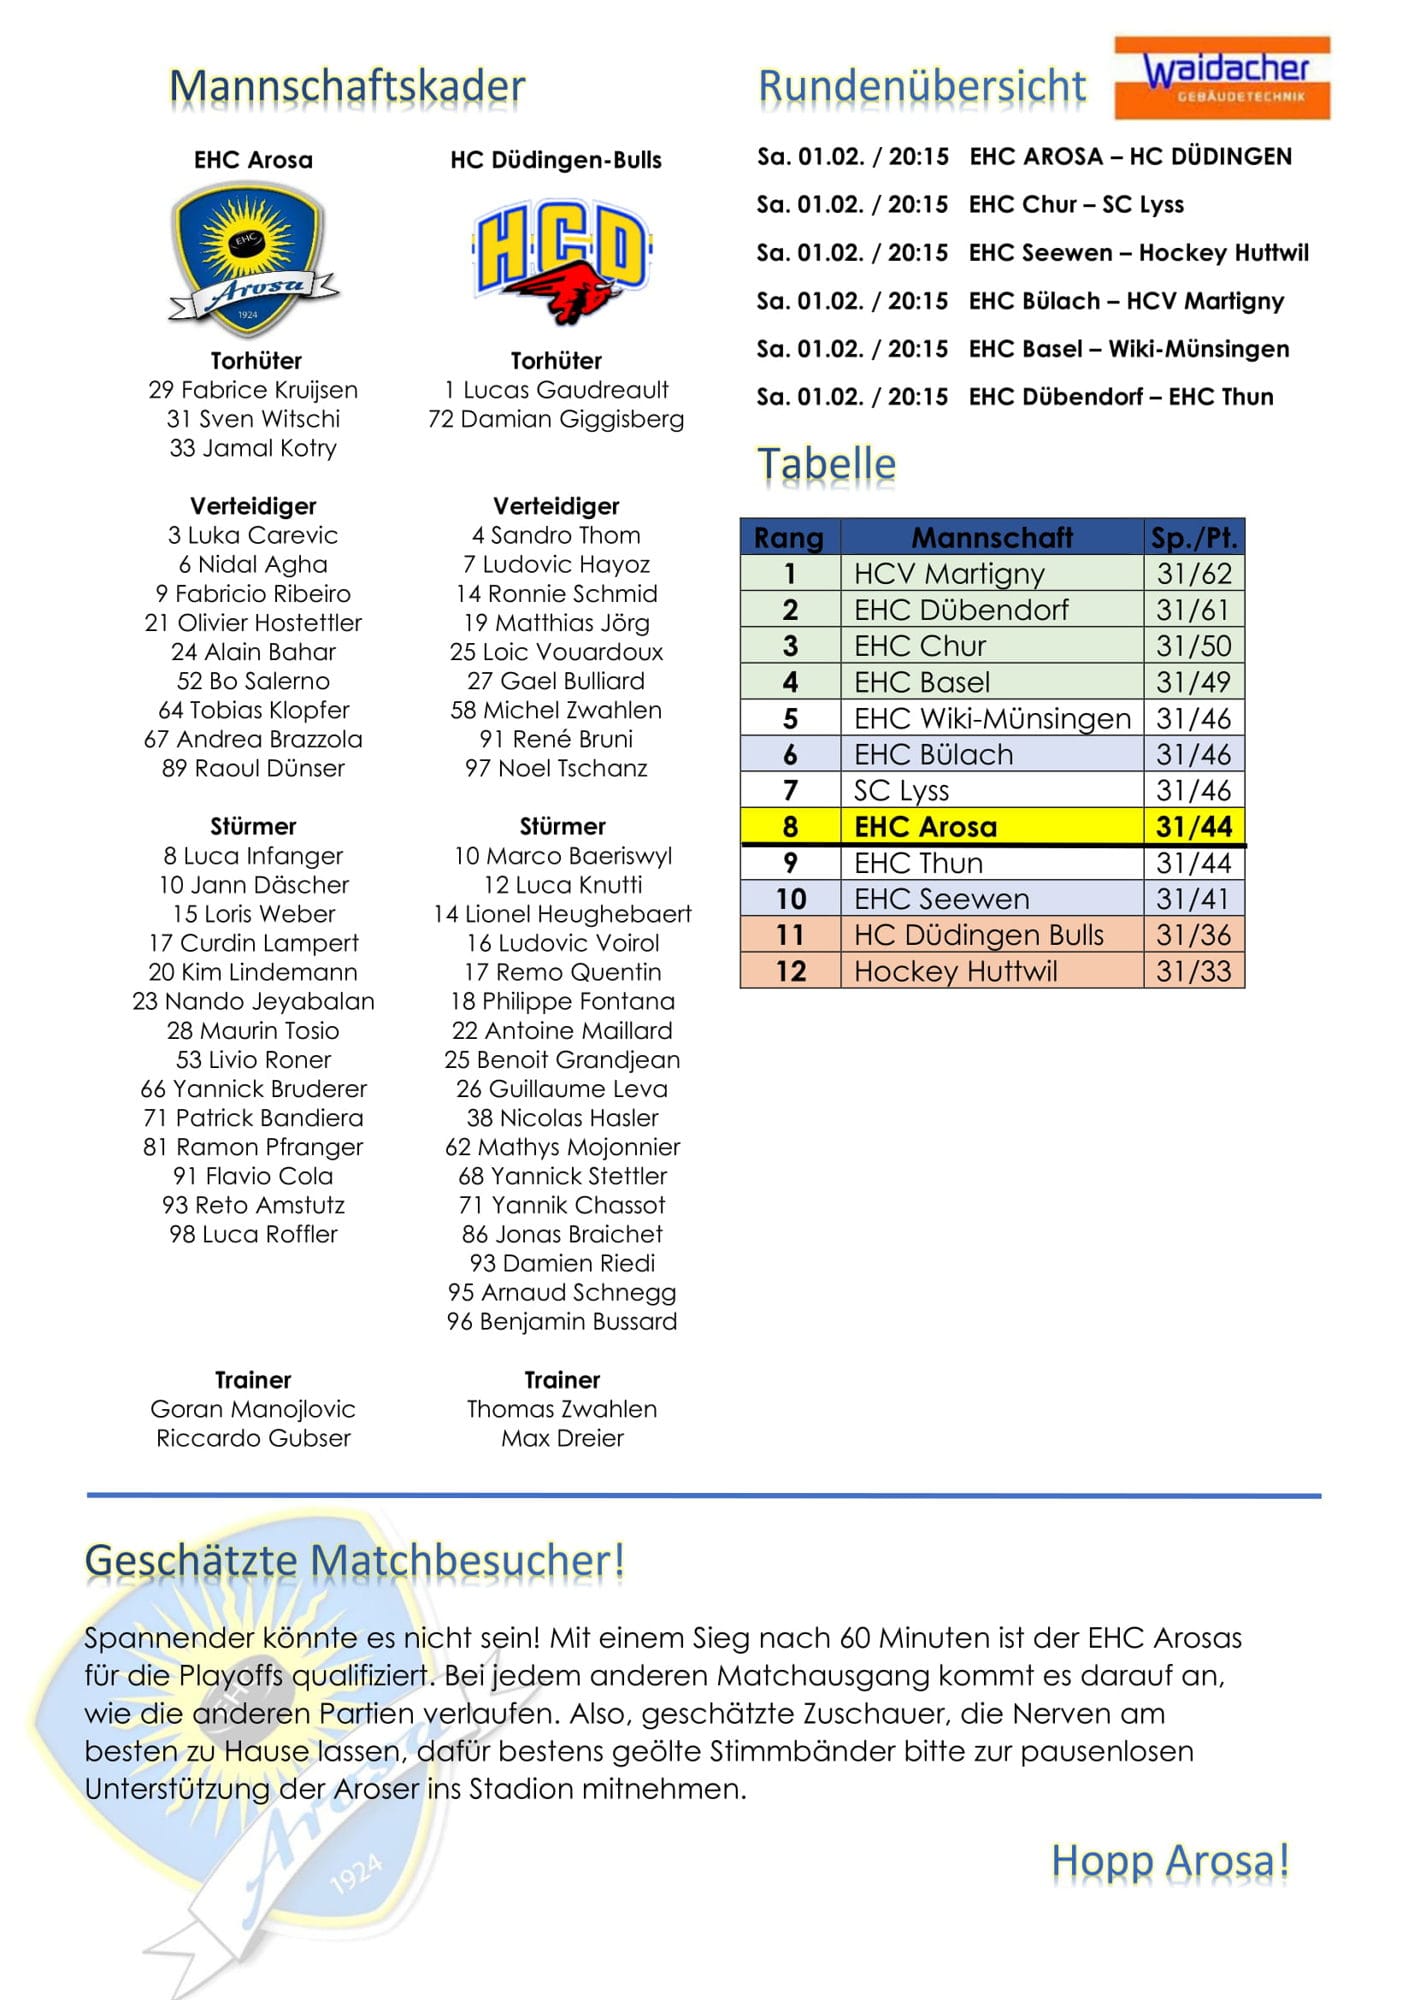 Matchflyer EHC Arosa - HC Düdingen Bulls, Seite 2.